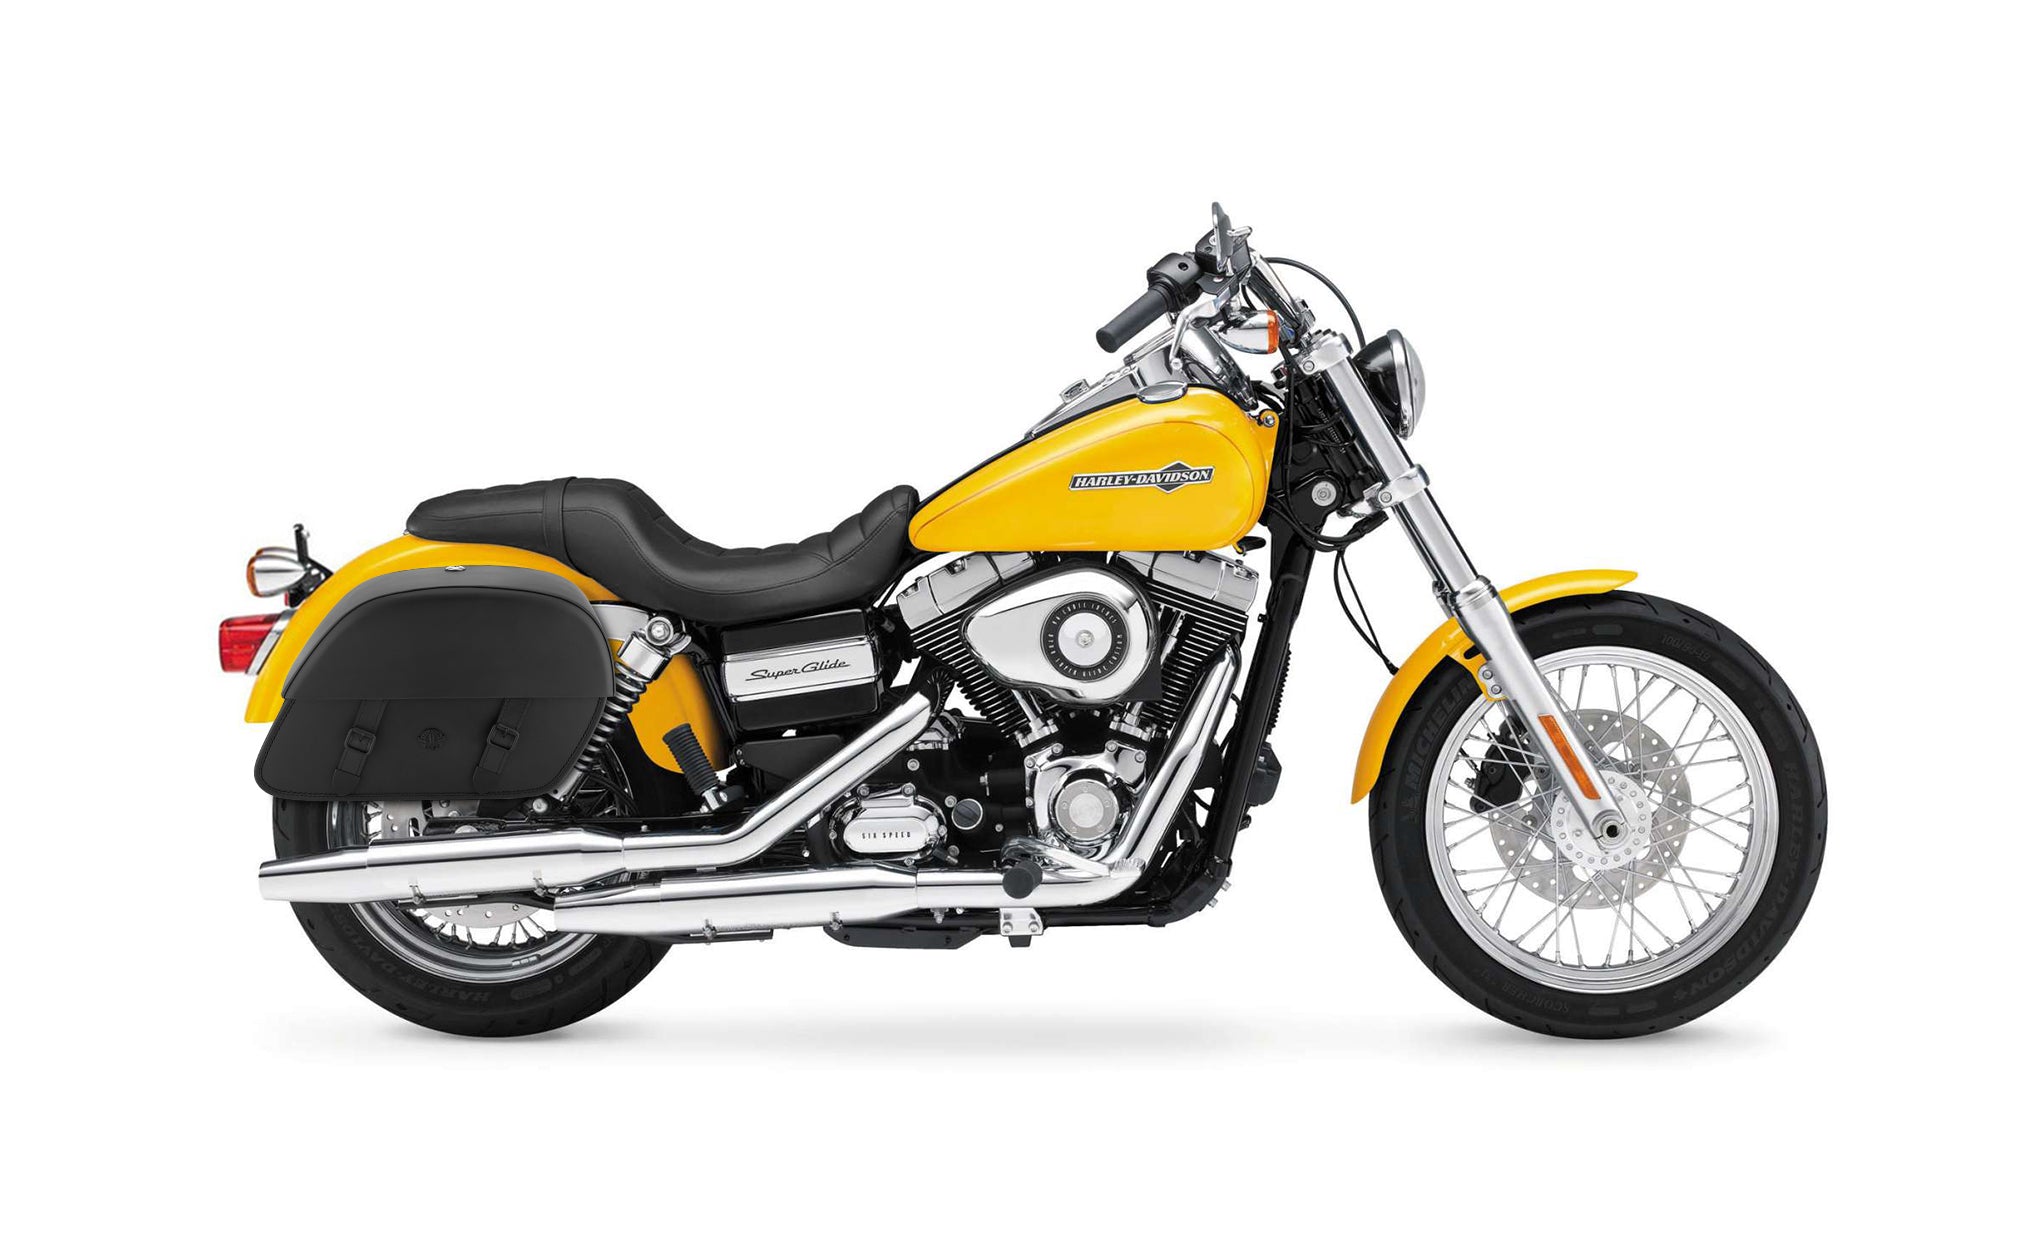 Viking Baelor Large Leather Motorcycle Saddlebags For Harley Dyna Super Glide Fxd I on Bike Photo @expand